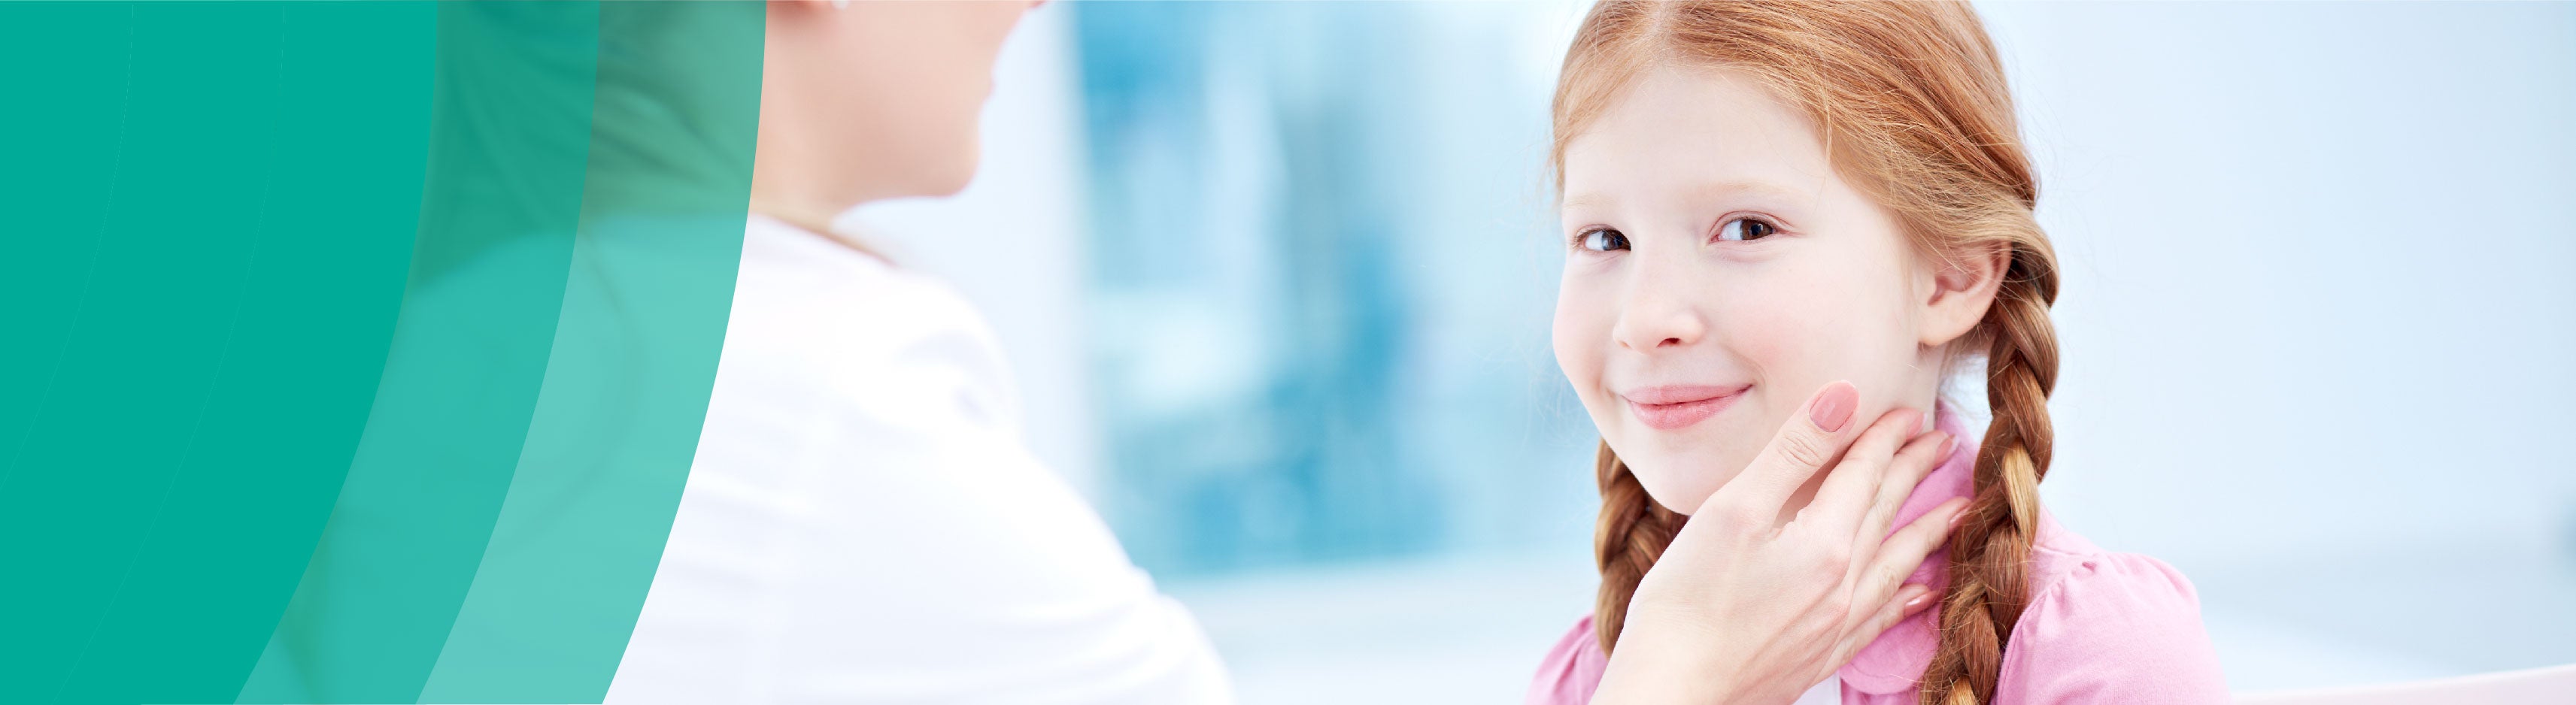 Healthcare examining a smiling girl's neck